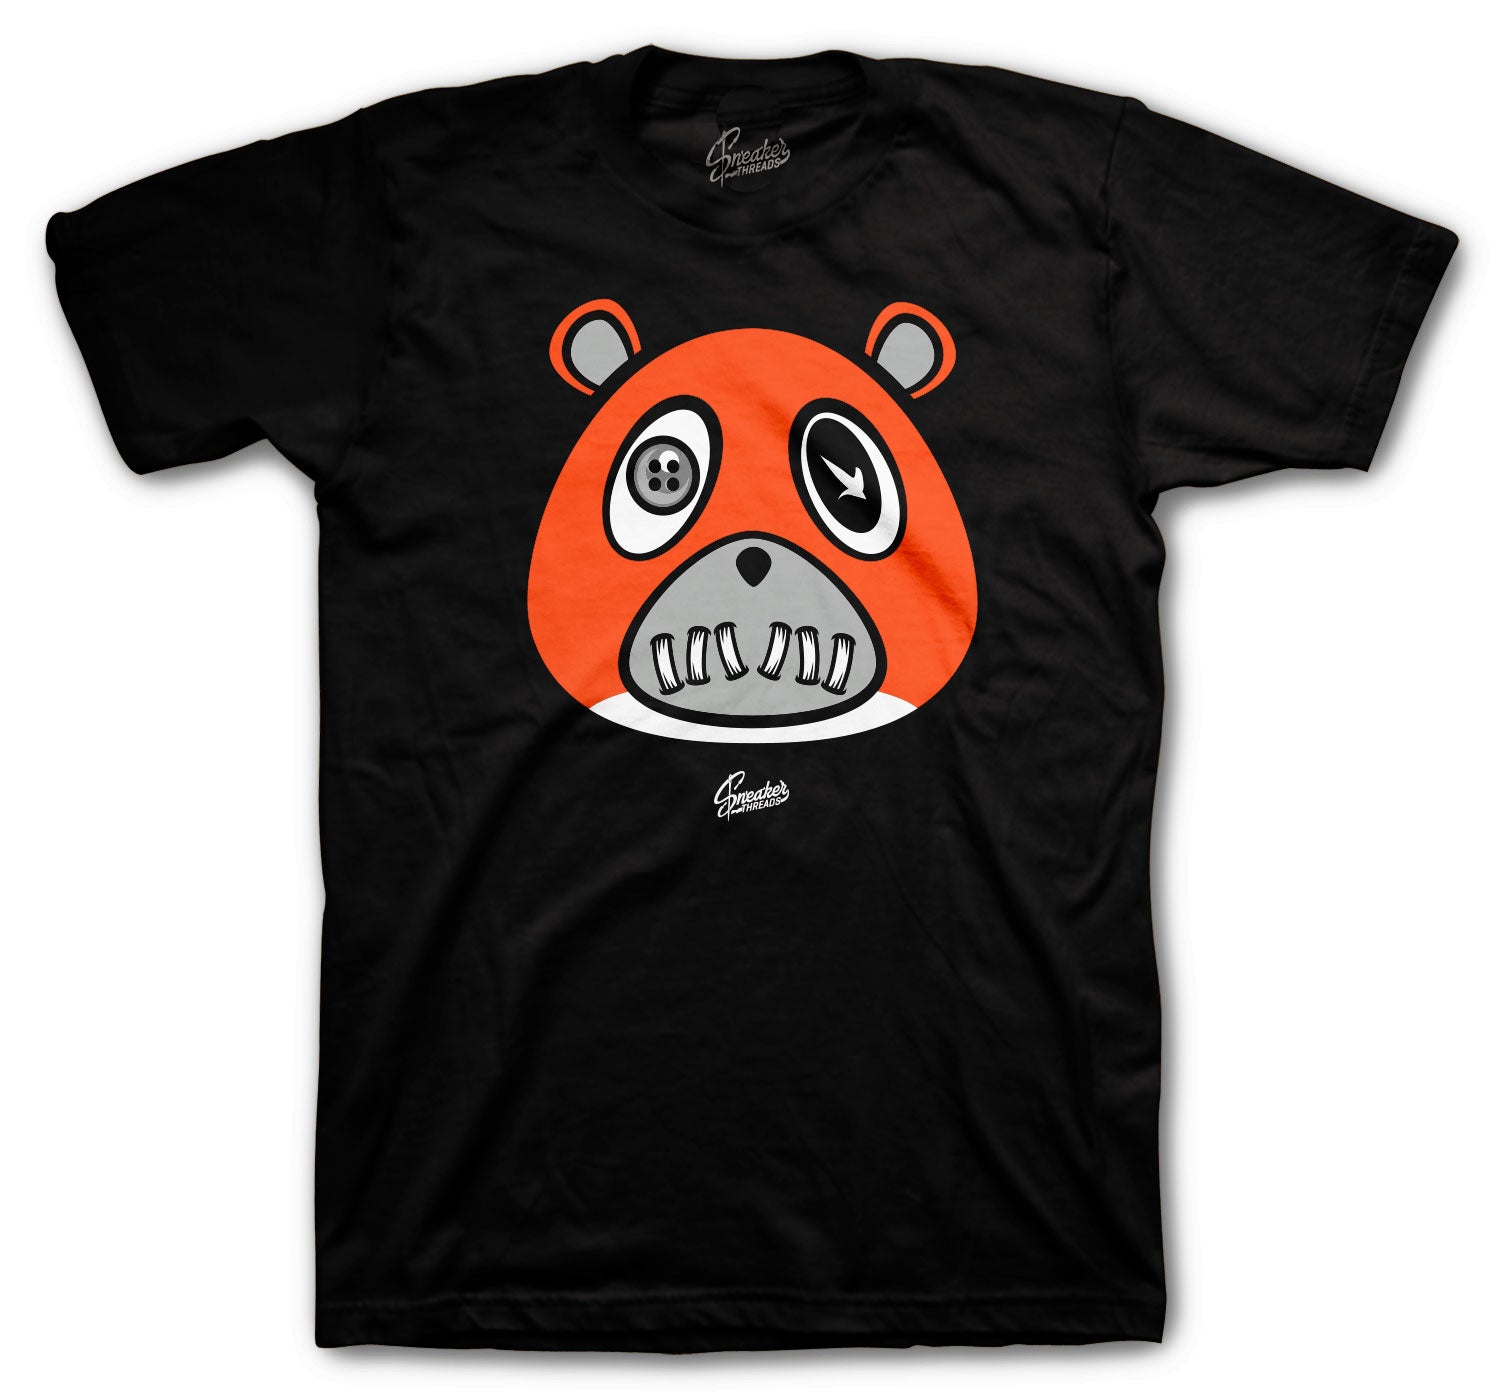 Foamposite Pro Halloween Shirt - ST Bear - Black